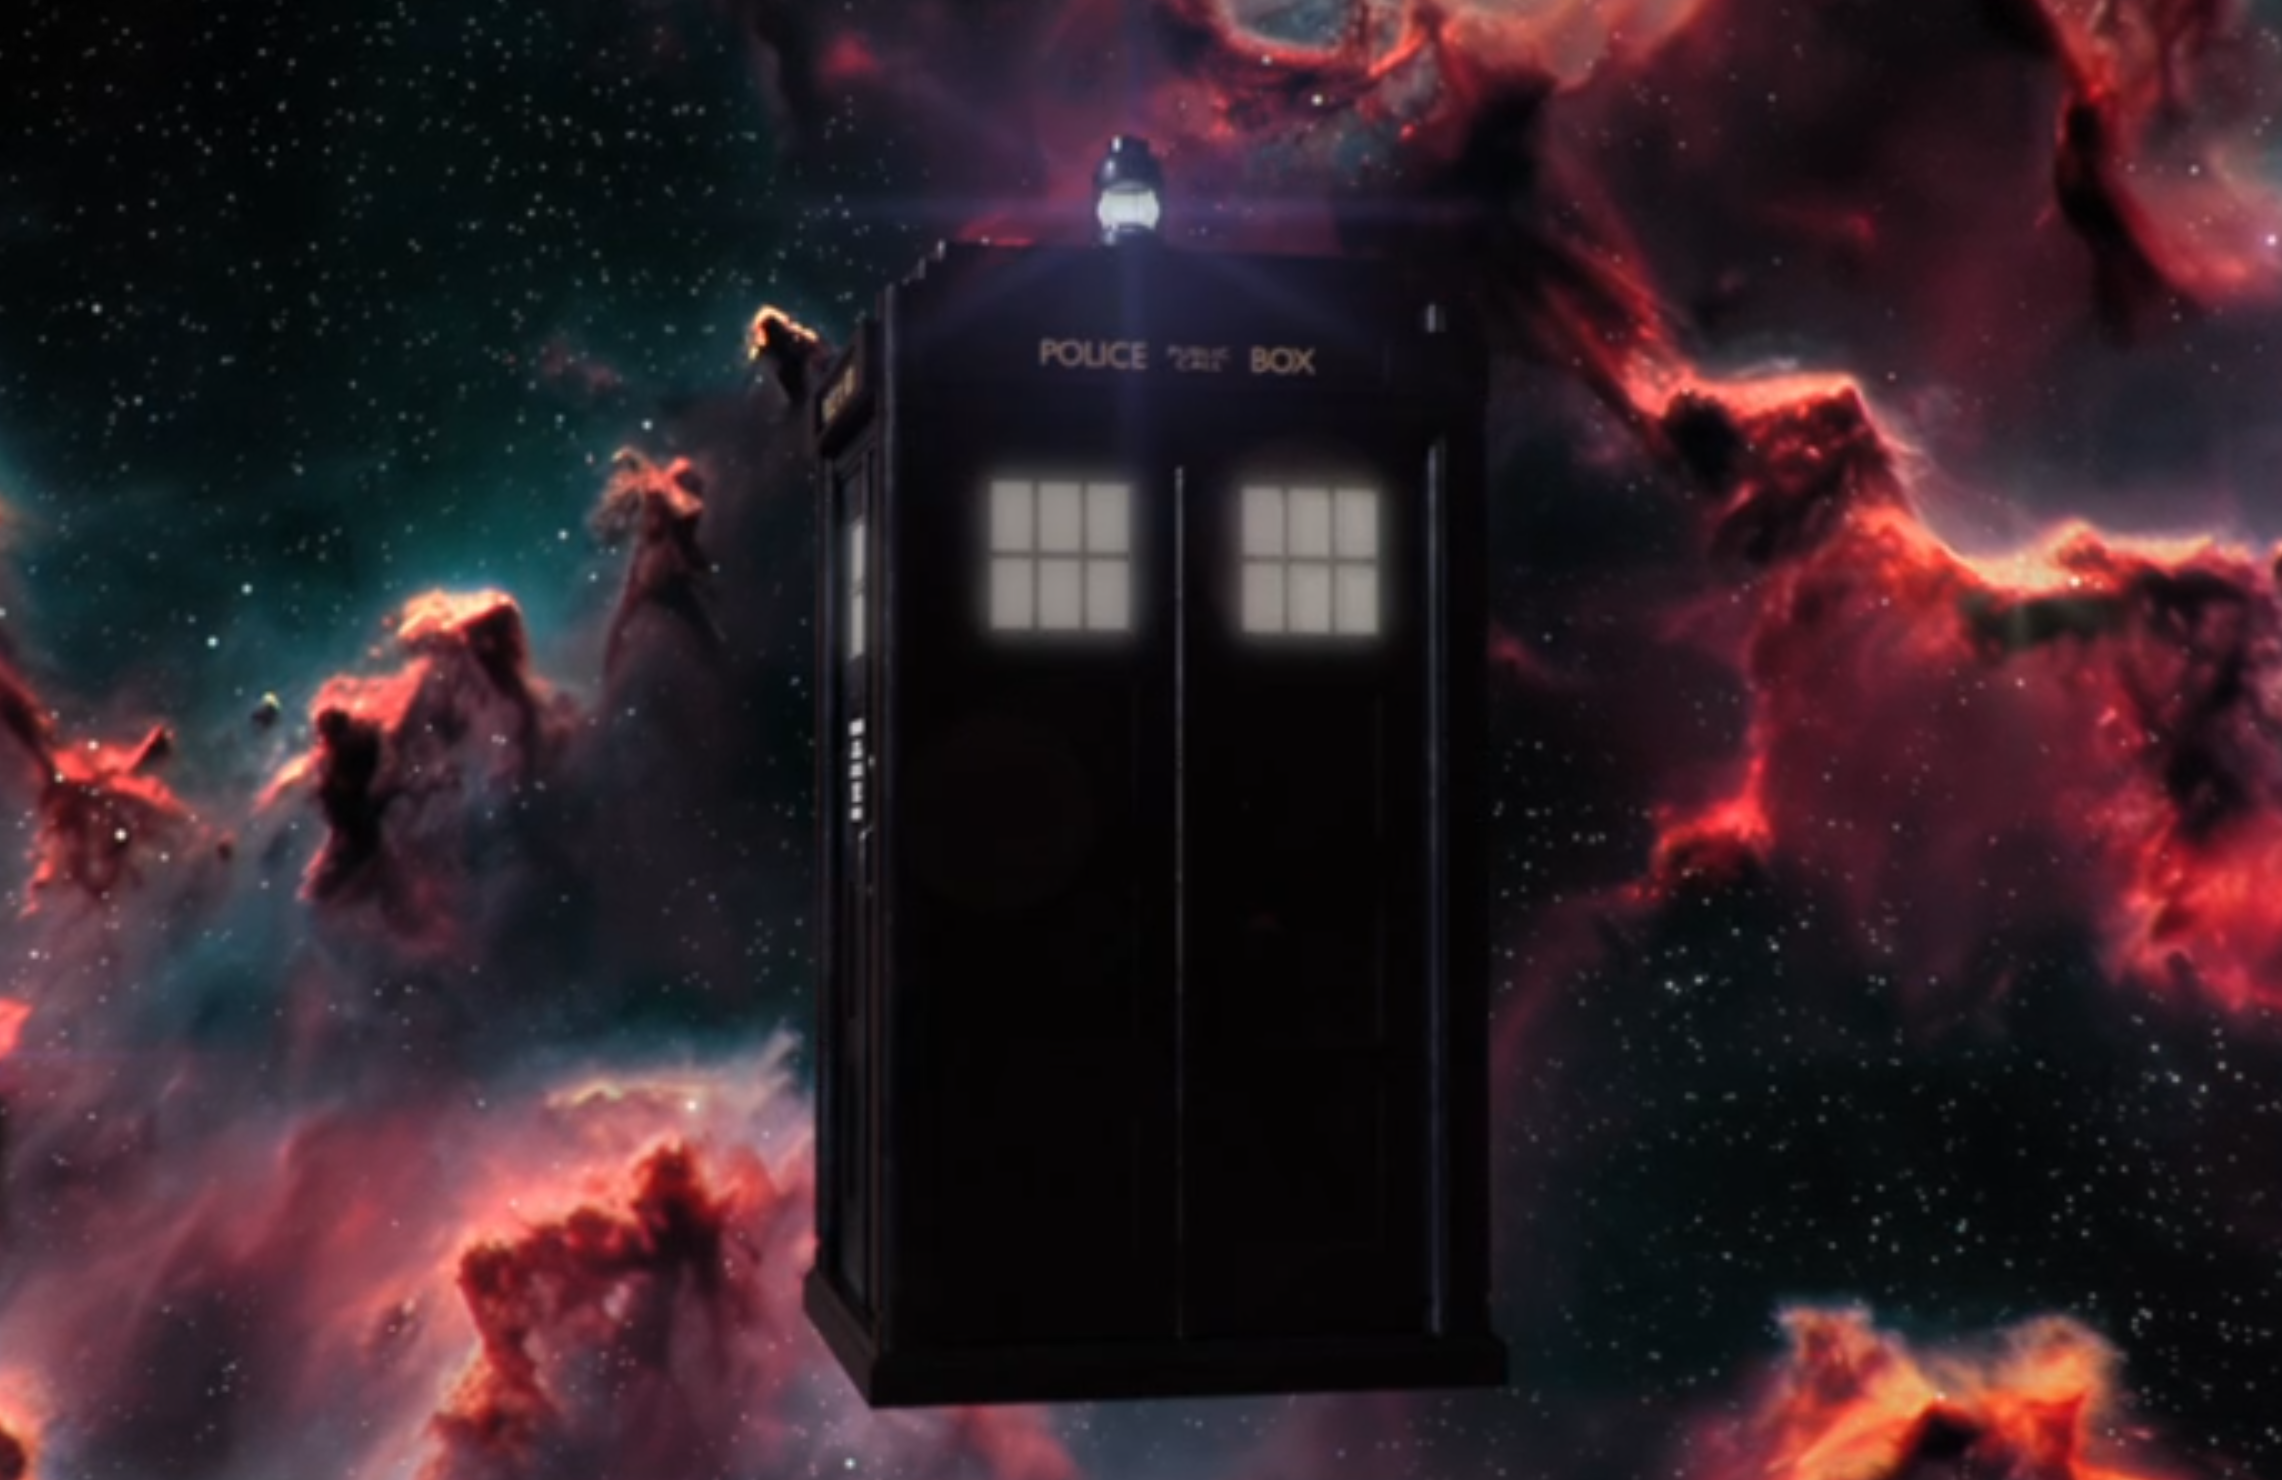 The Memory TARDIS in flight. (TV: The Three Doctors [+]Loading...["The Three Doctors (TotT TV story)"])